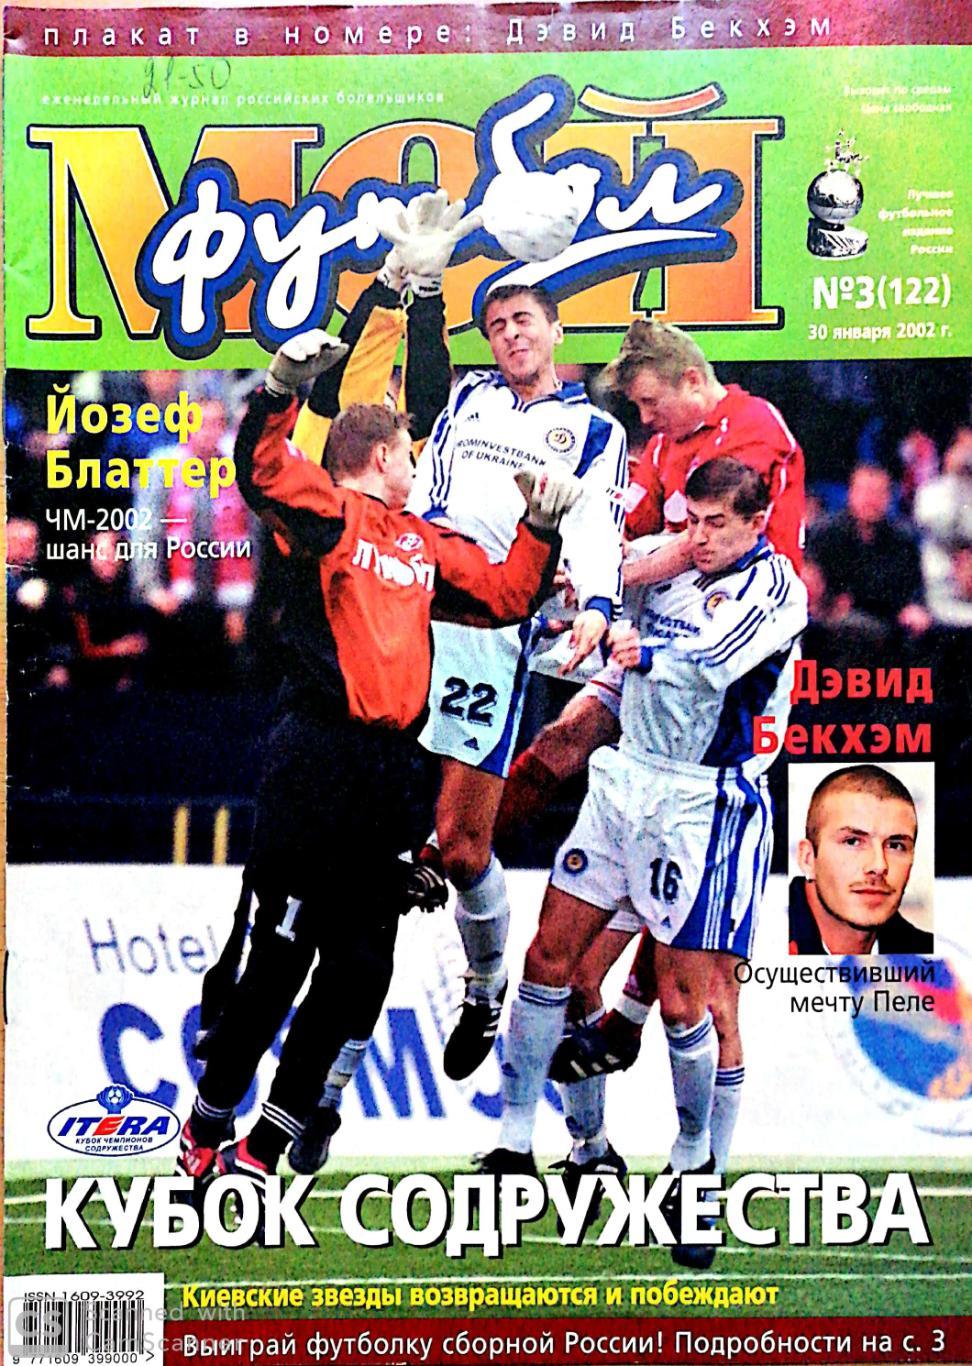 Журнал Мой футбол (Москва). №3 2002+постер Бекхэм